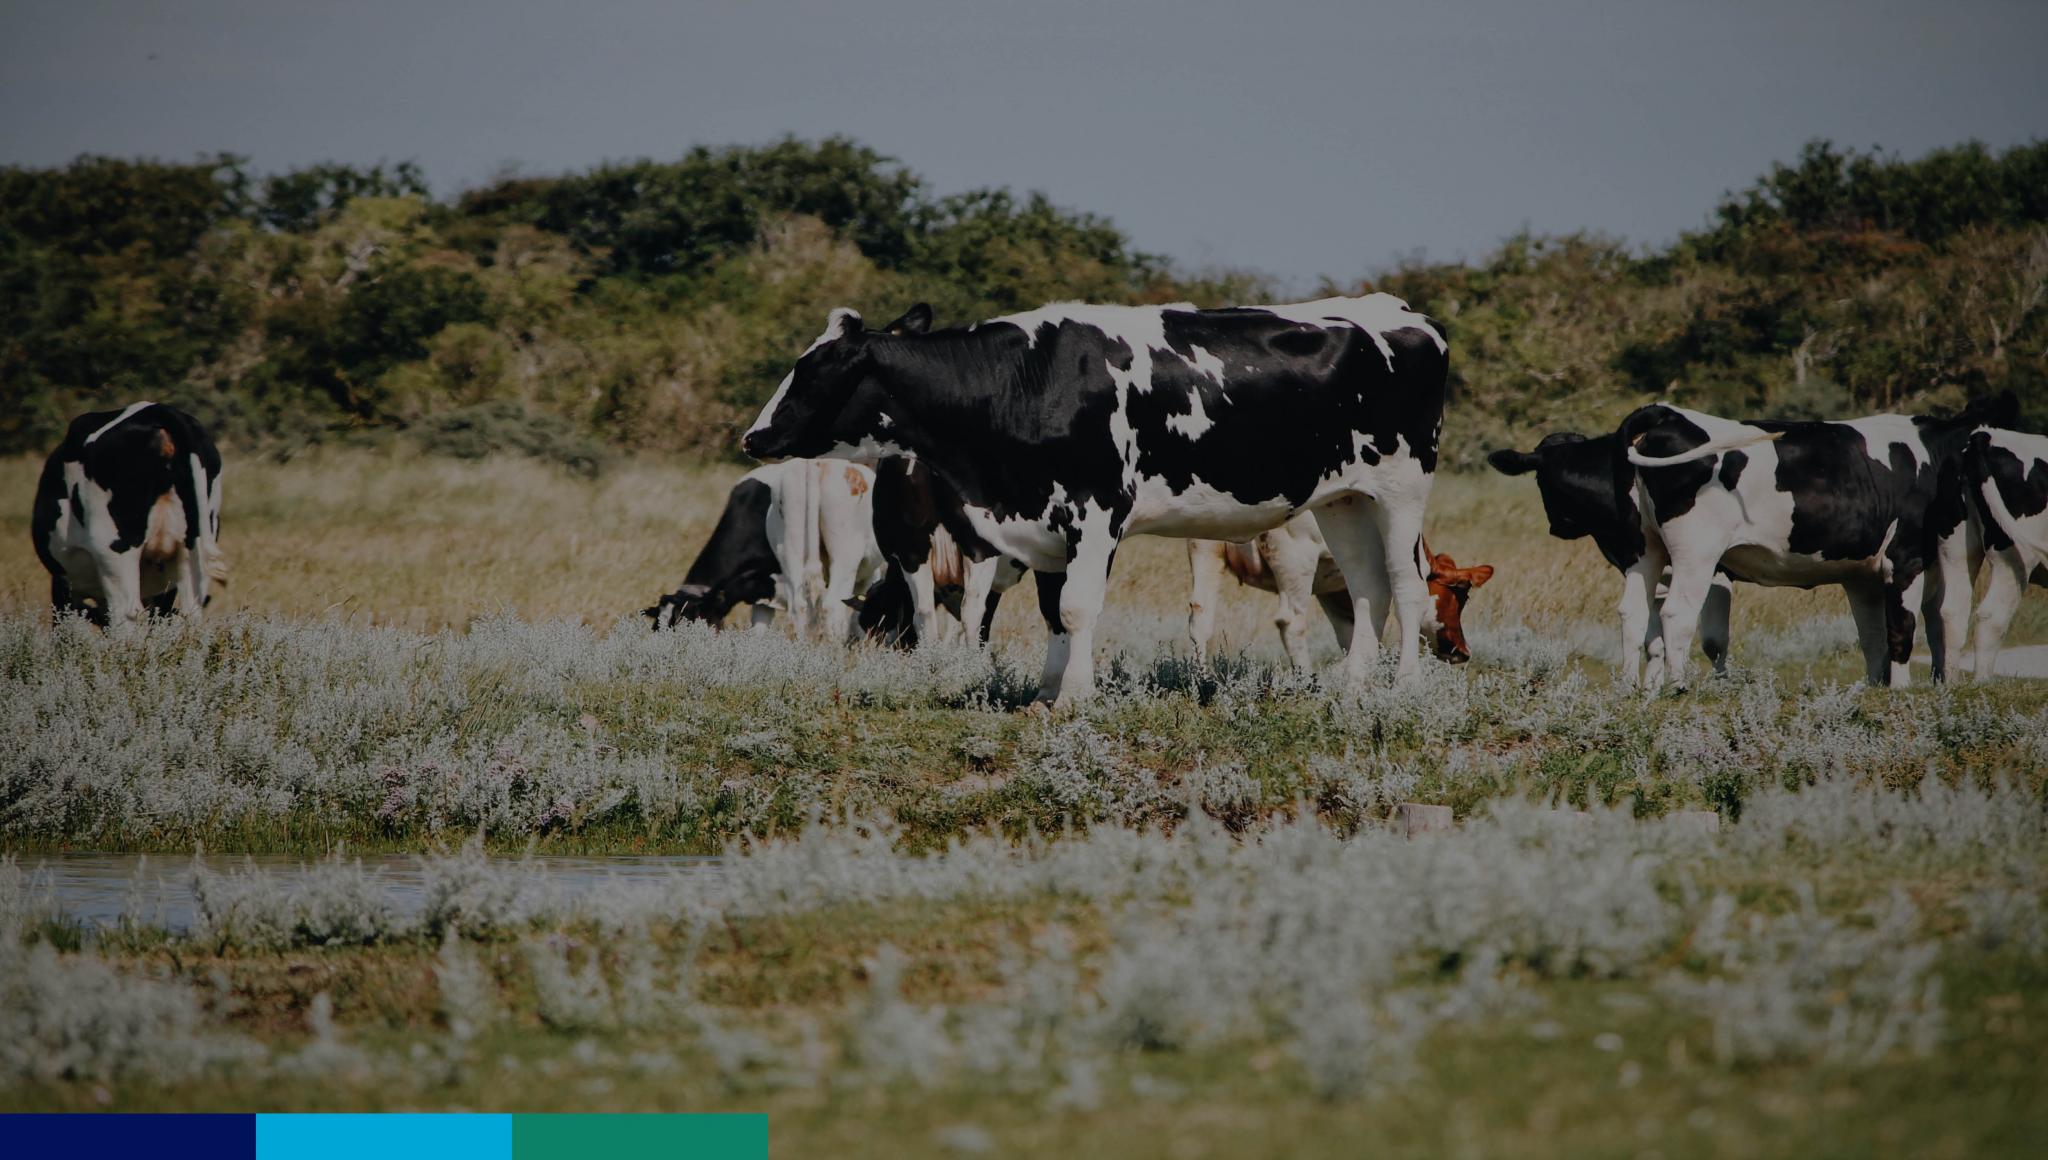 Unsplash Jan Erik Leusink - Cows in a field (edited picture)